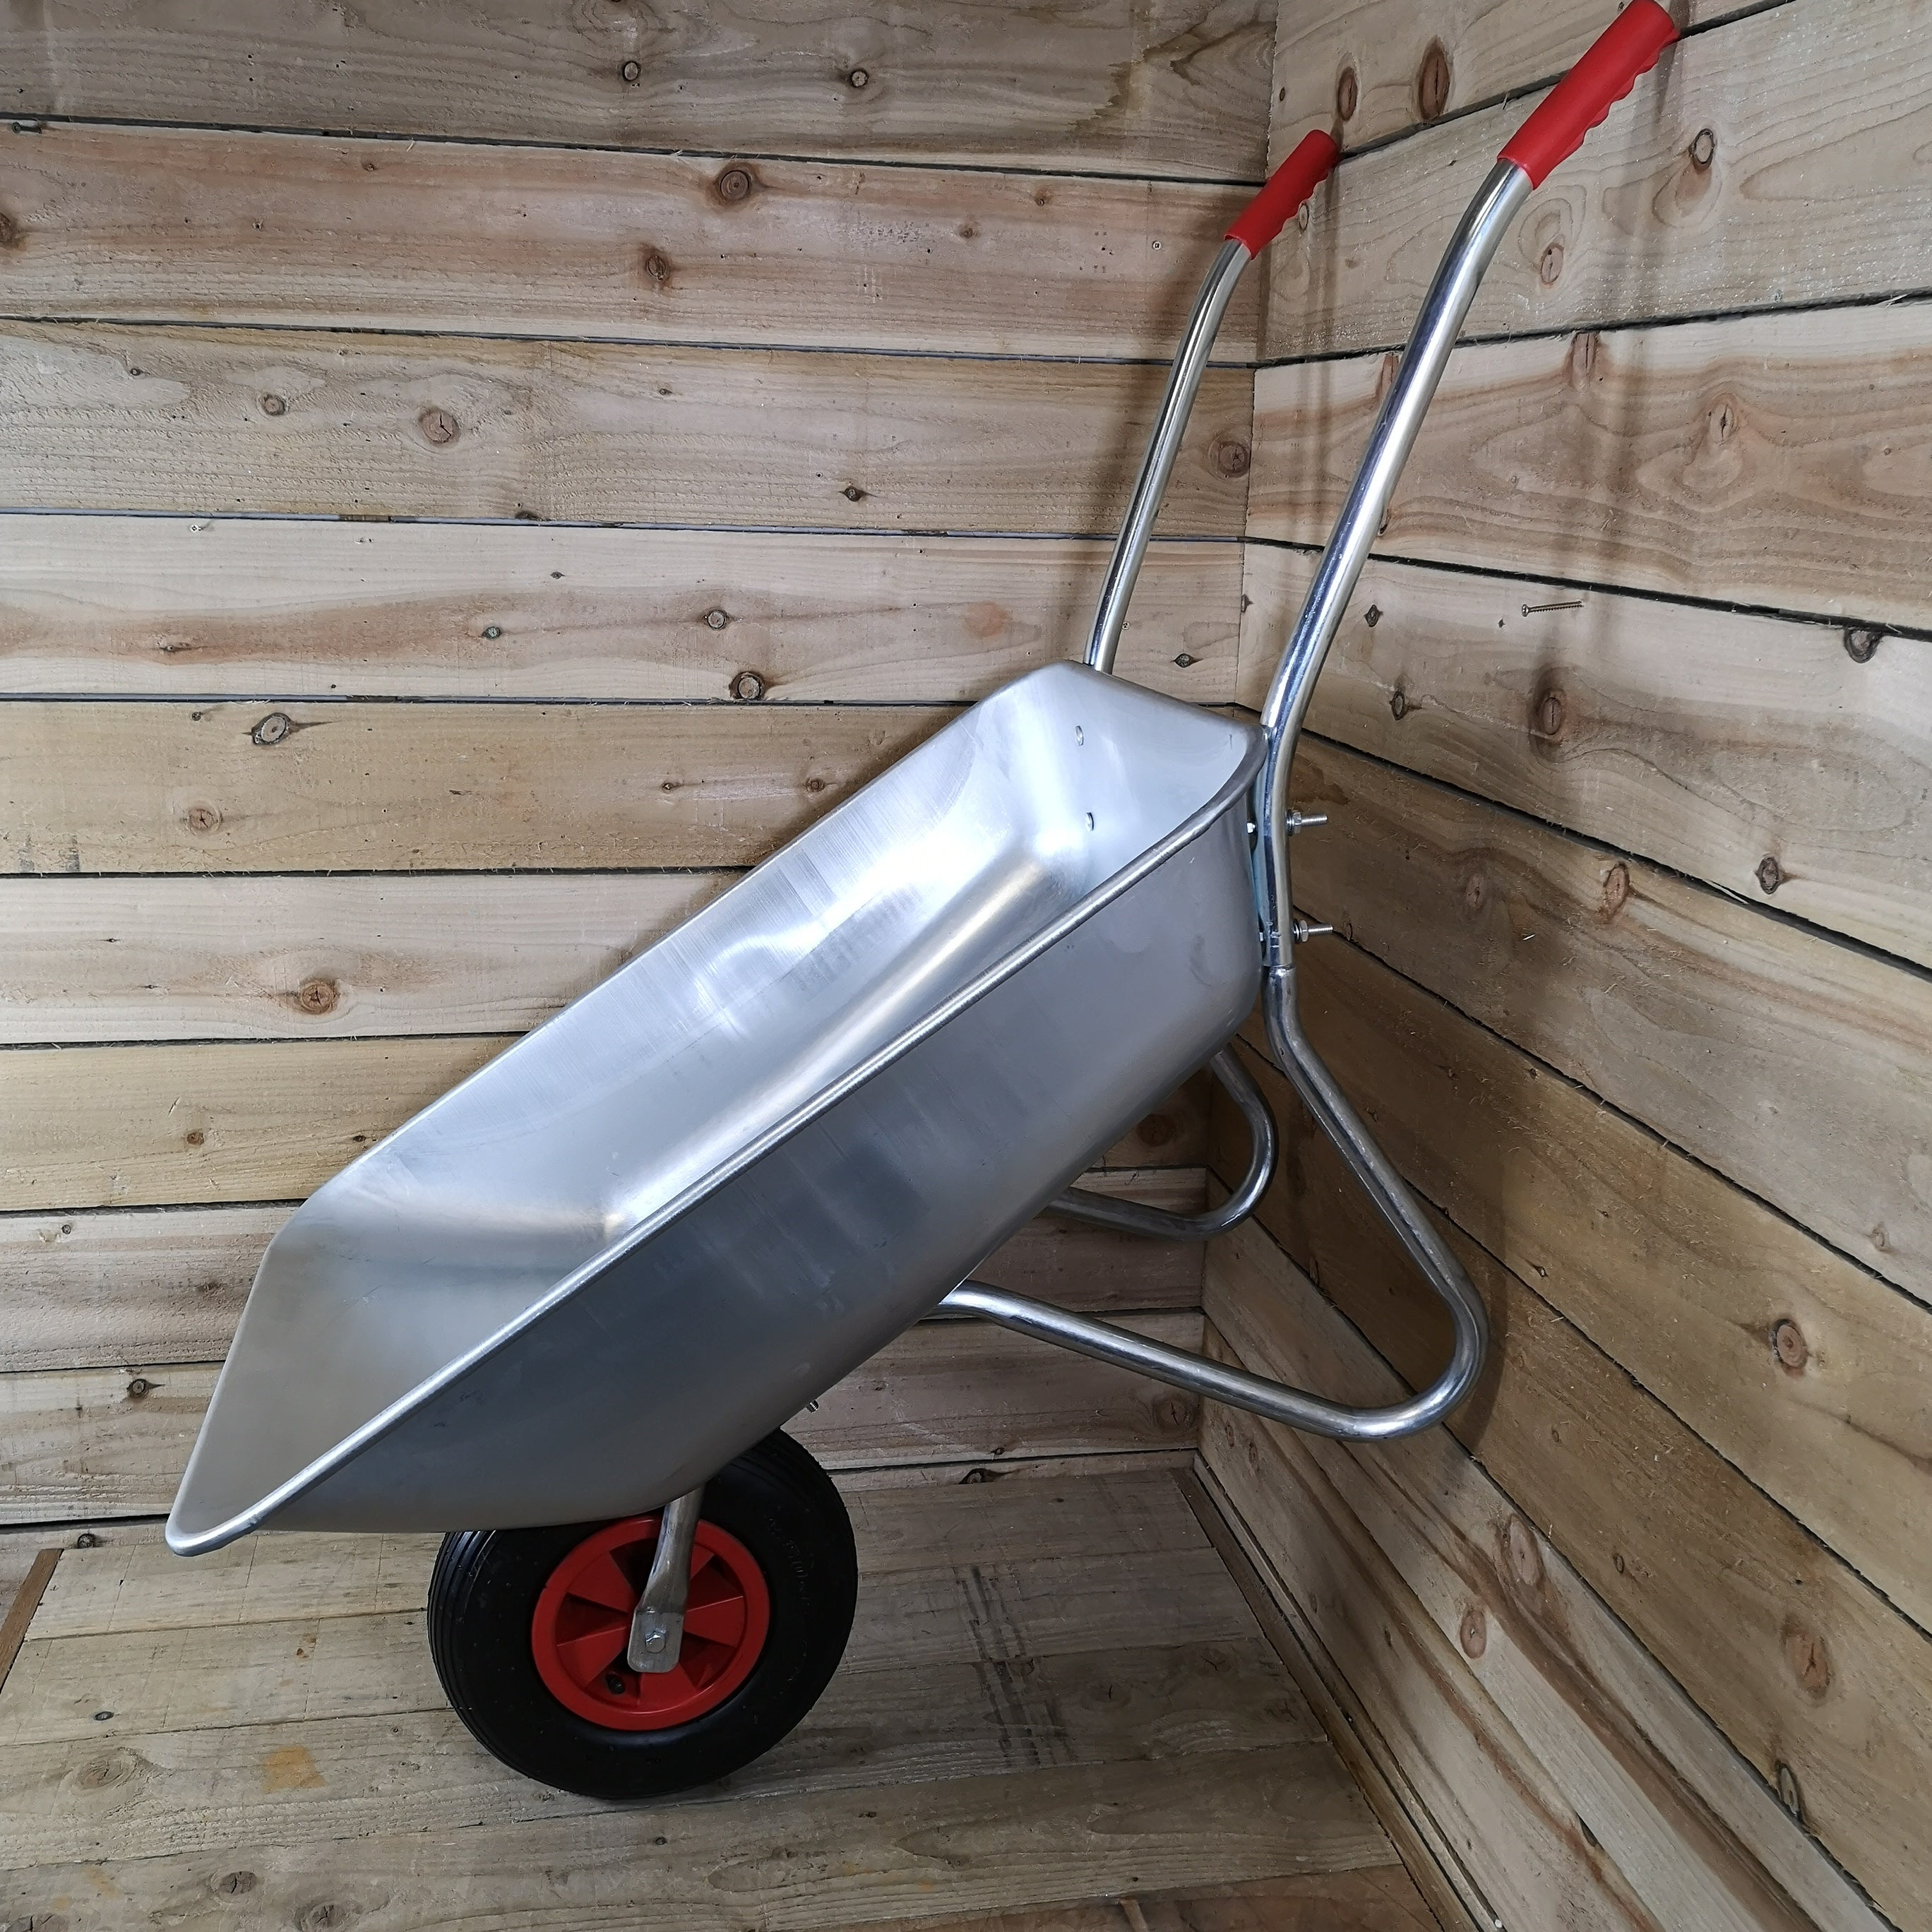 65 Litre 60kg Capacity Galvanised Metal Garden Wheelbarrow with Pneumatic Tyre